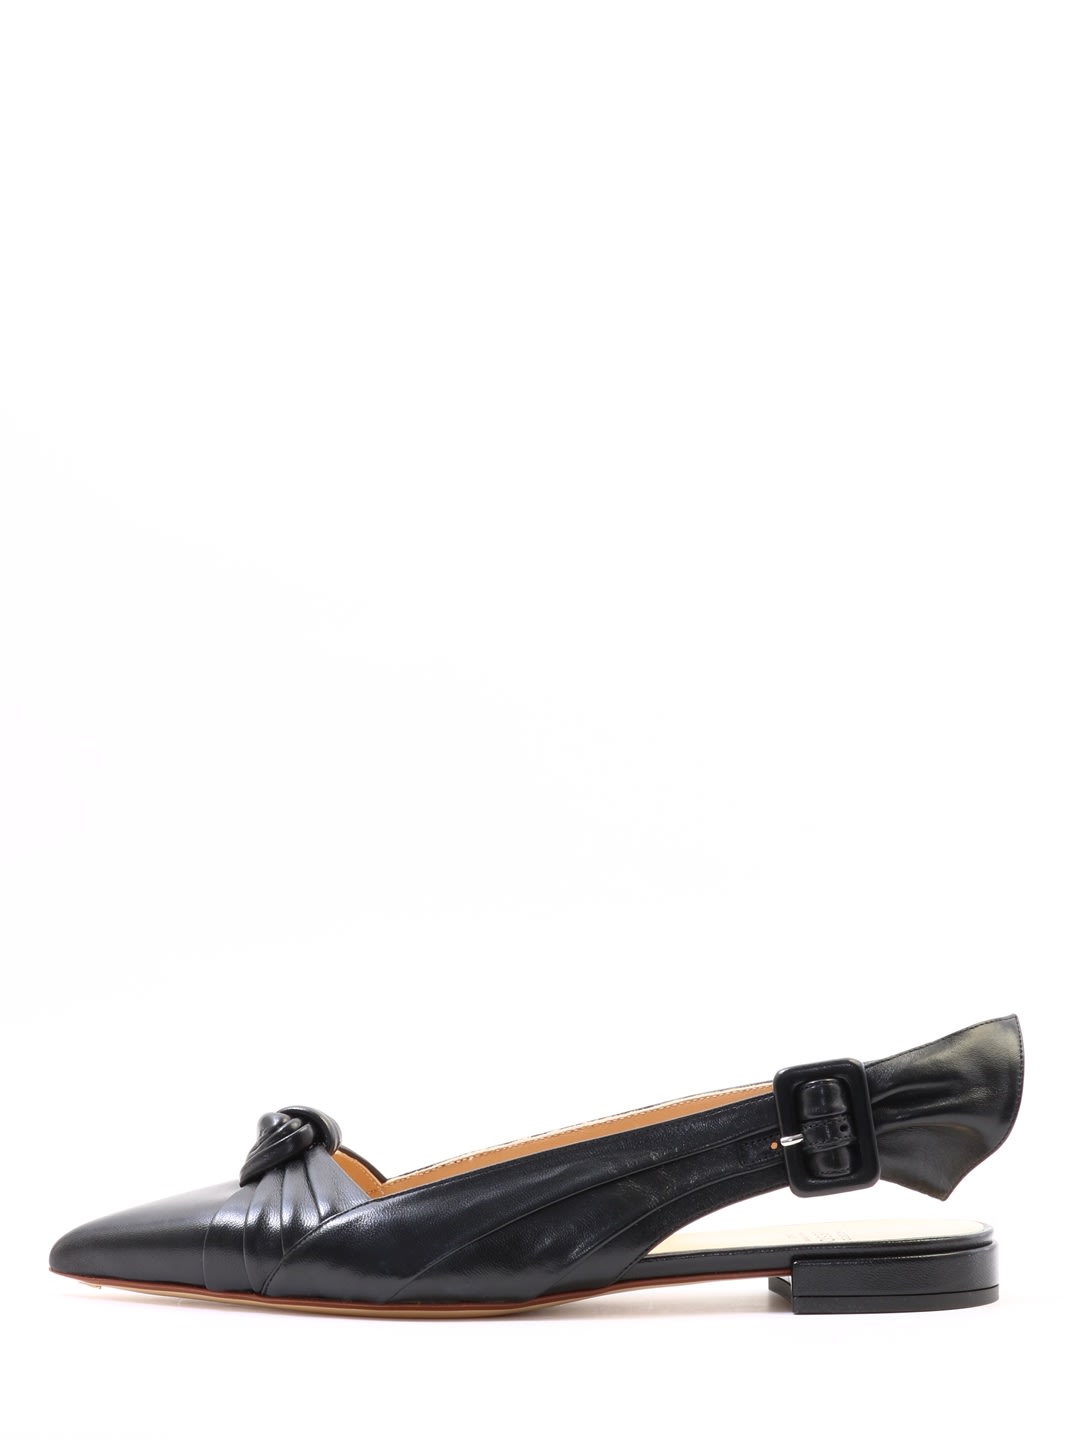 Buy Francesco Russo Ballet Shoes Knot Black online, shop Francesco Russo shoes with free shipping